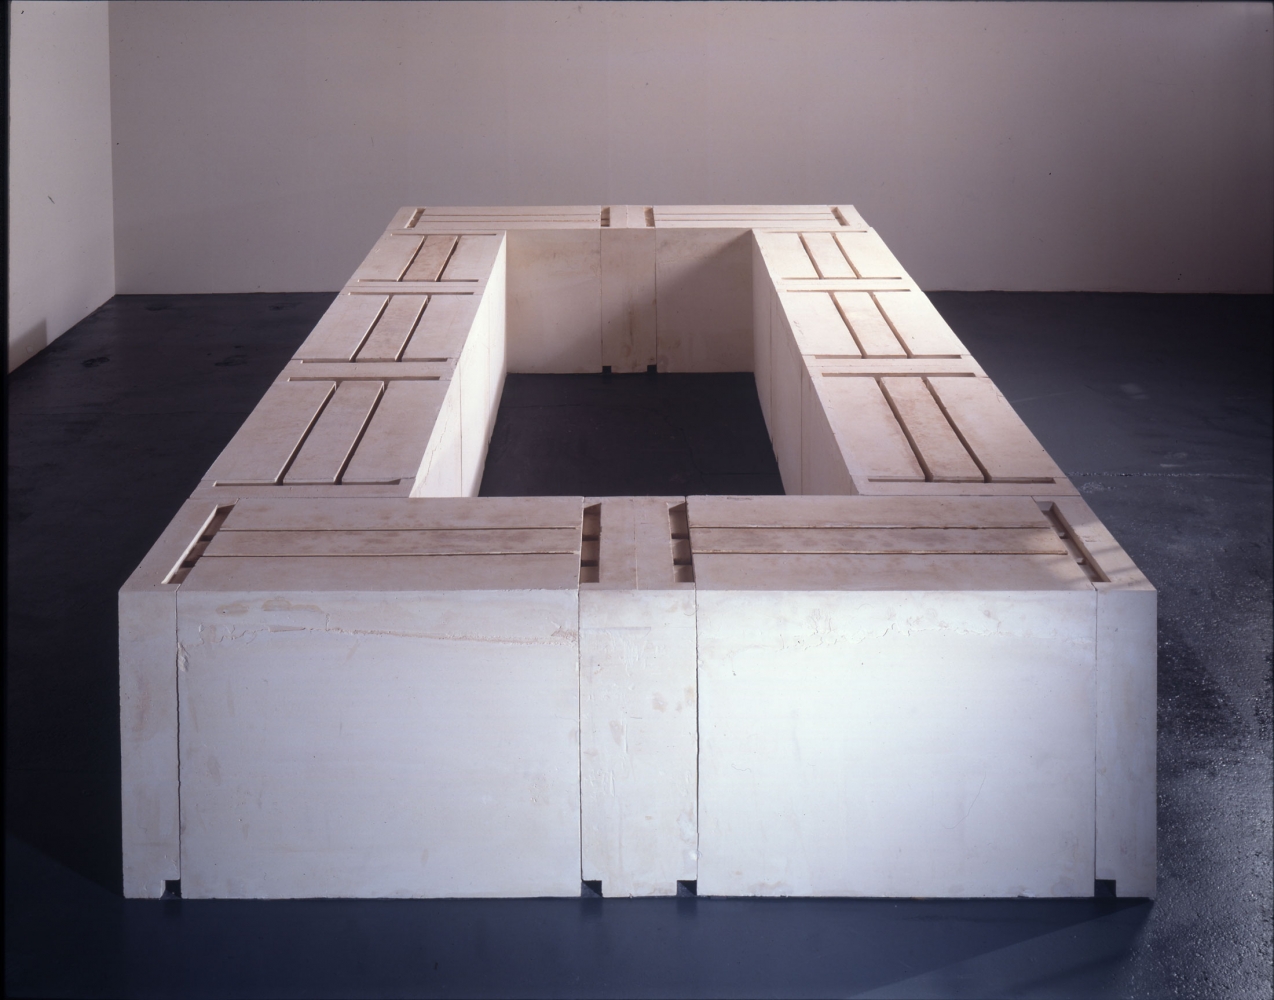 Rachel Whiteread
Untitled (Ten Tables), 1996
Plaster
28 1/2 x 94 1/4 x 188 1/4 inches
(72.4 x 239.4 x 478.2 cm)